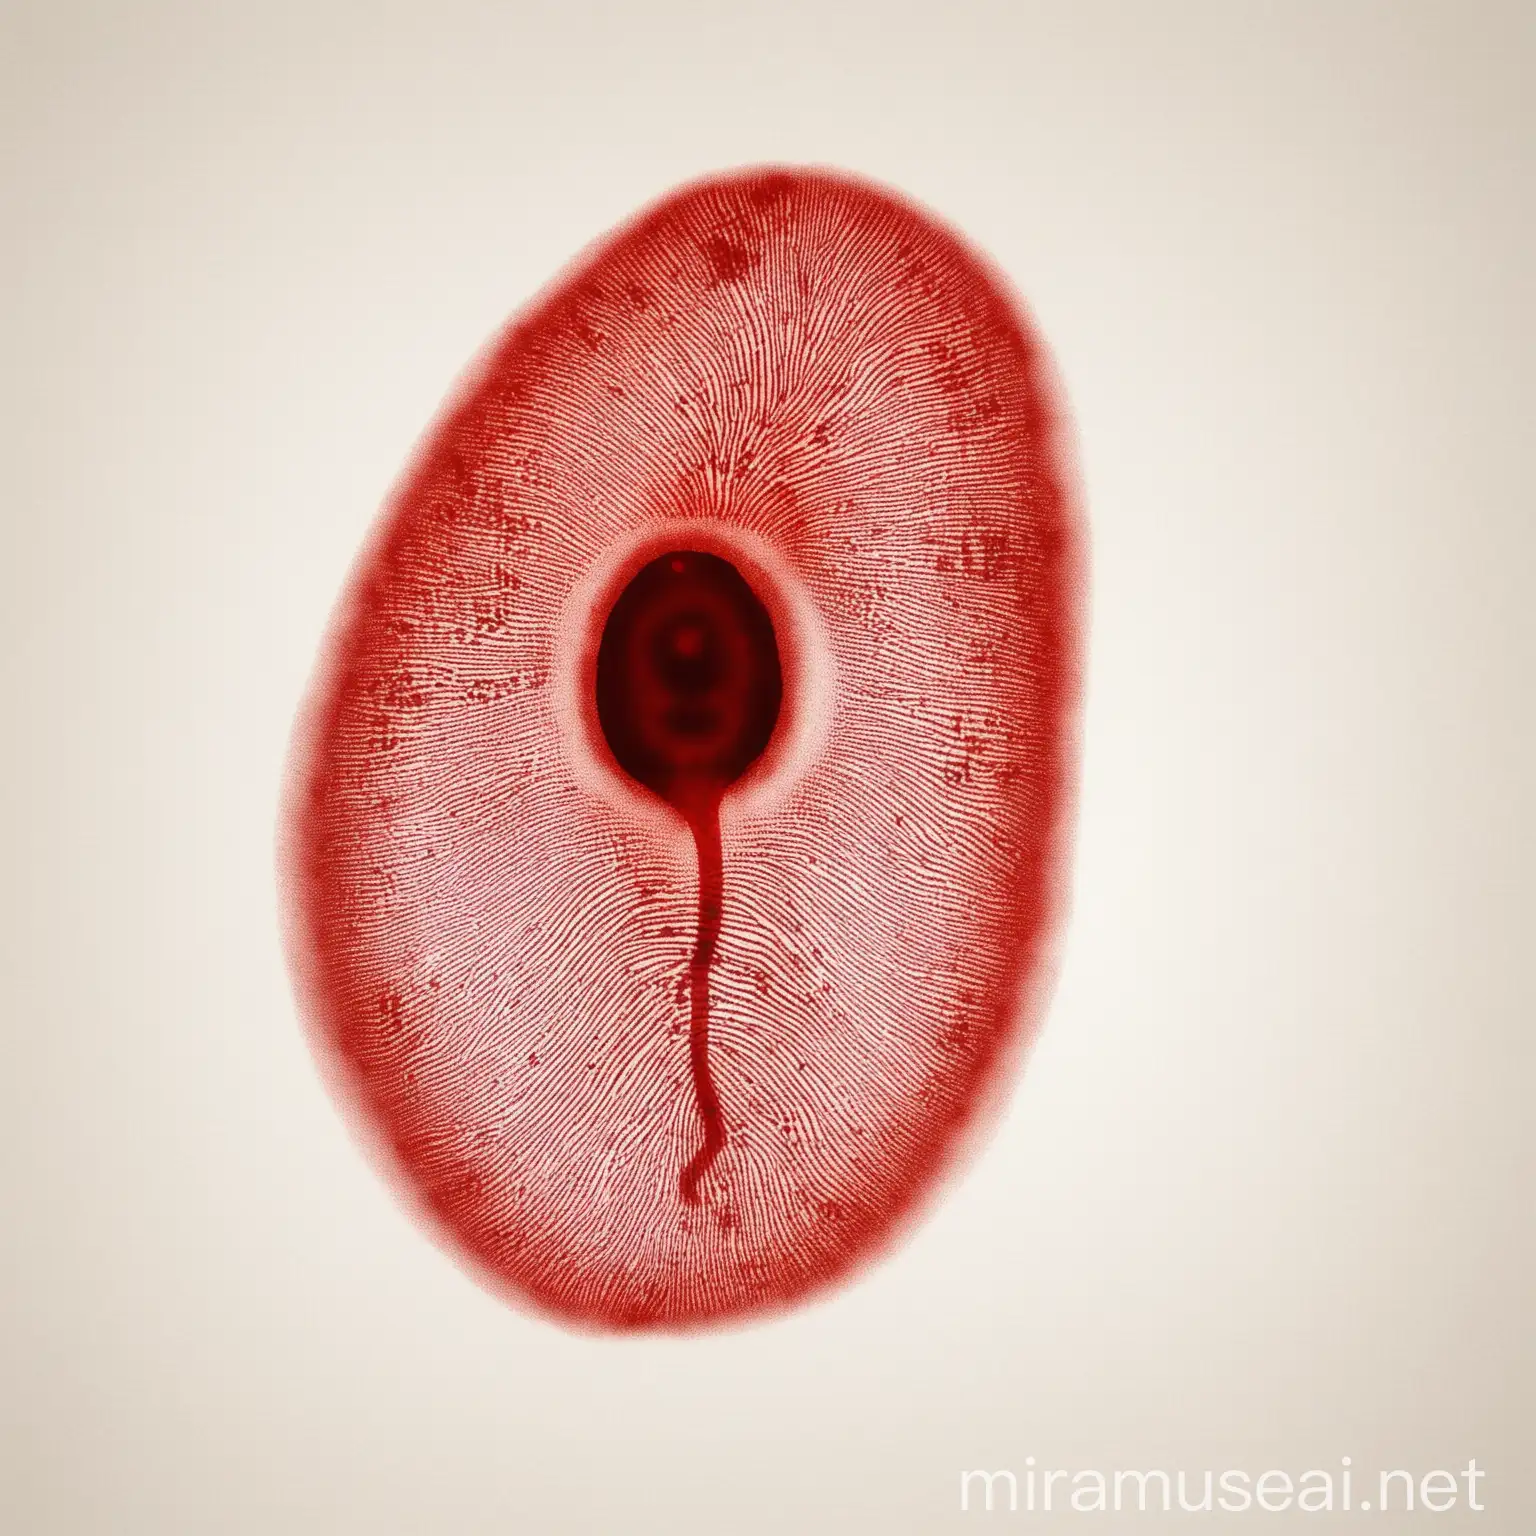 Human Kidney with Unique Fingerprint Pattern